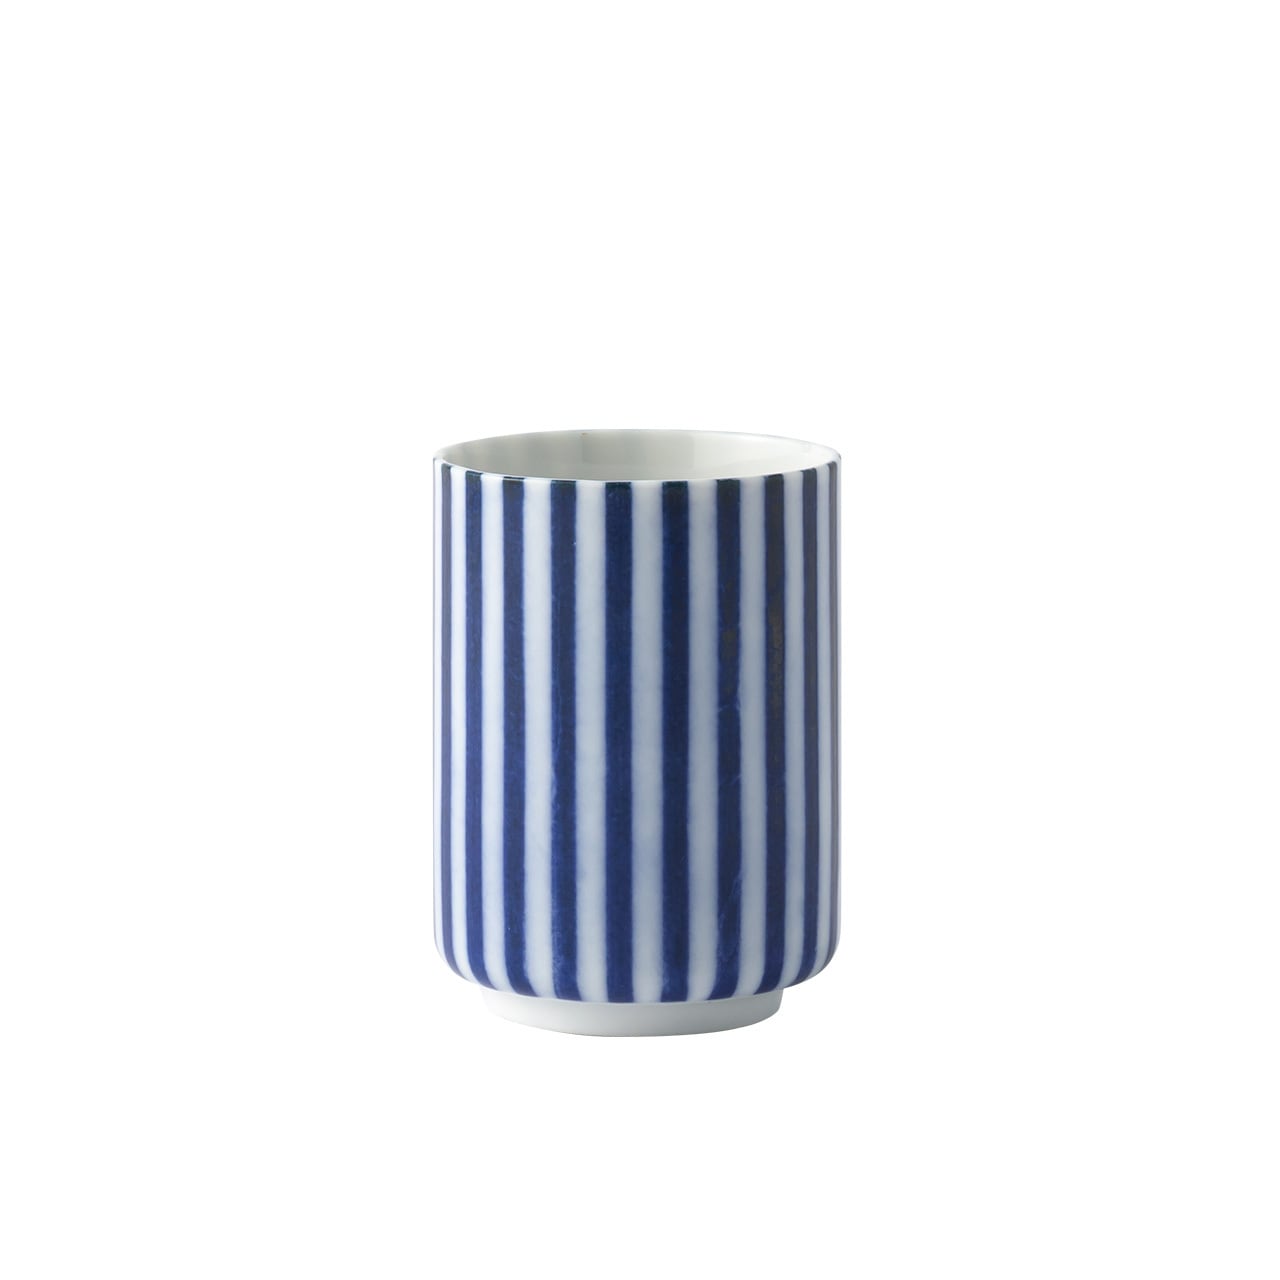 Striped teacup